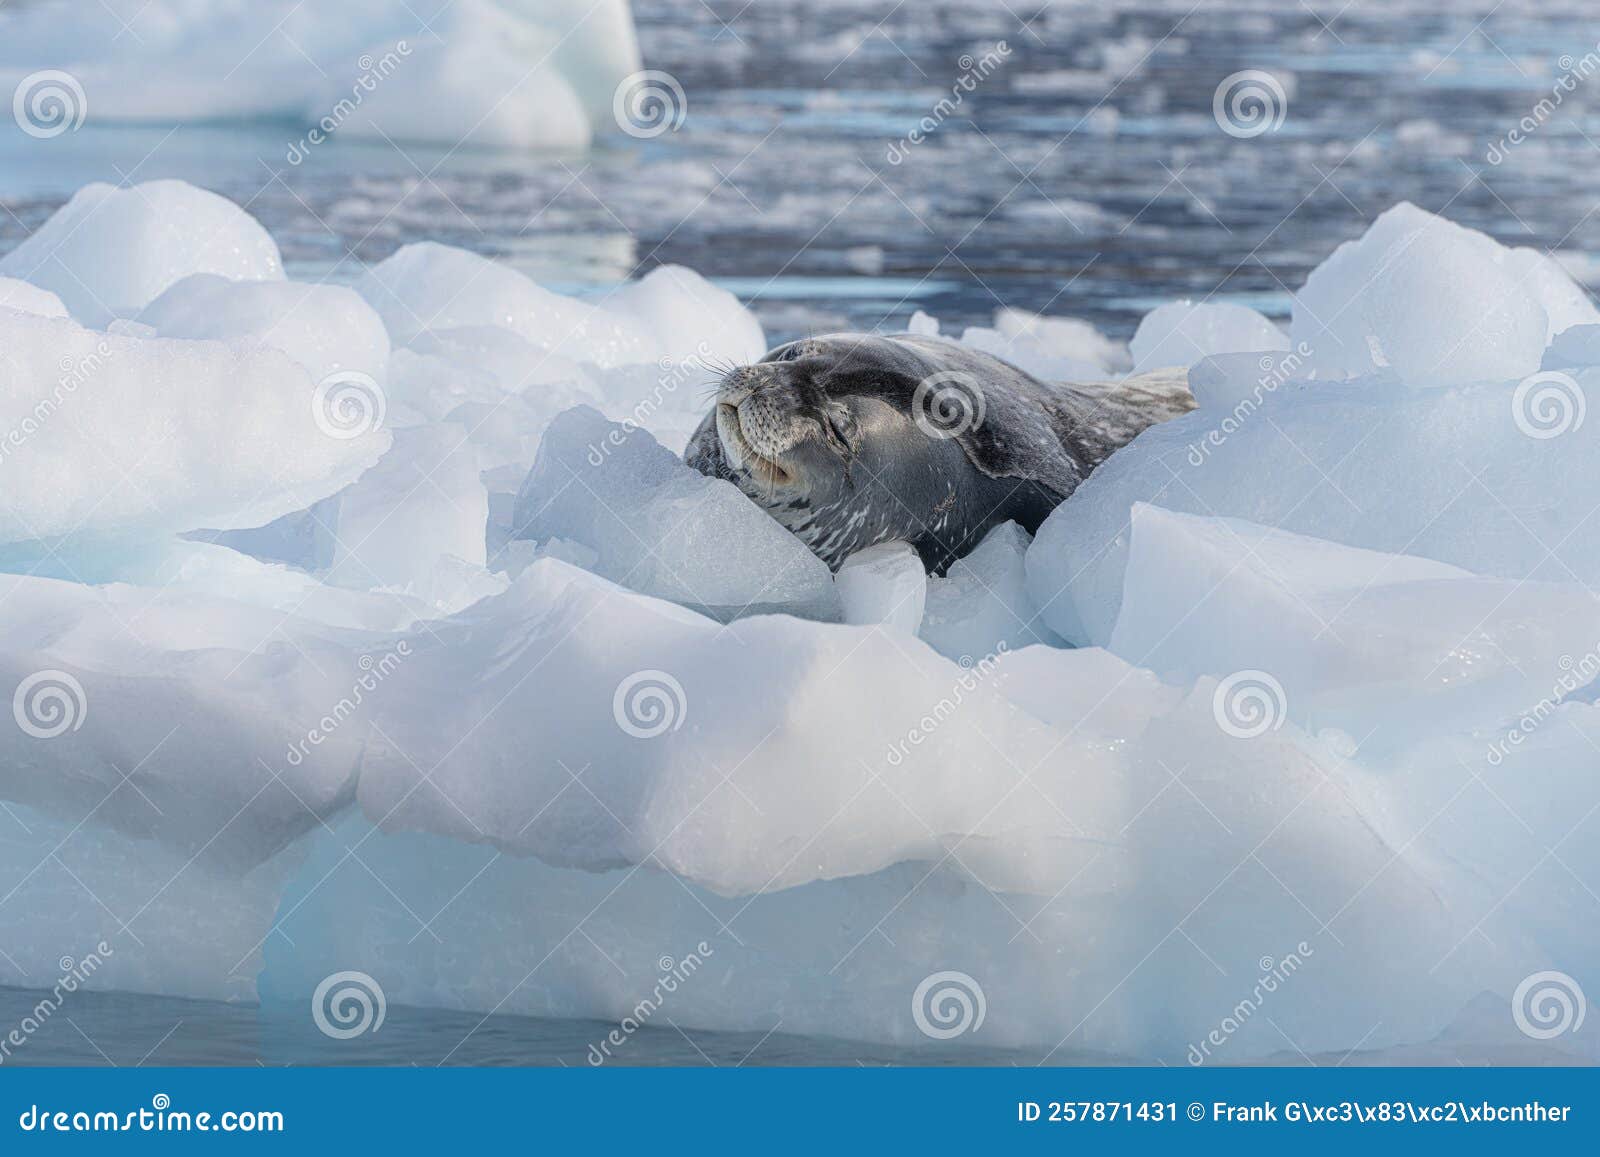 leopard seal (hydrurga leptonyx) on an ice floe in antarctica's cierva cove